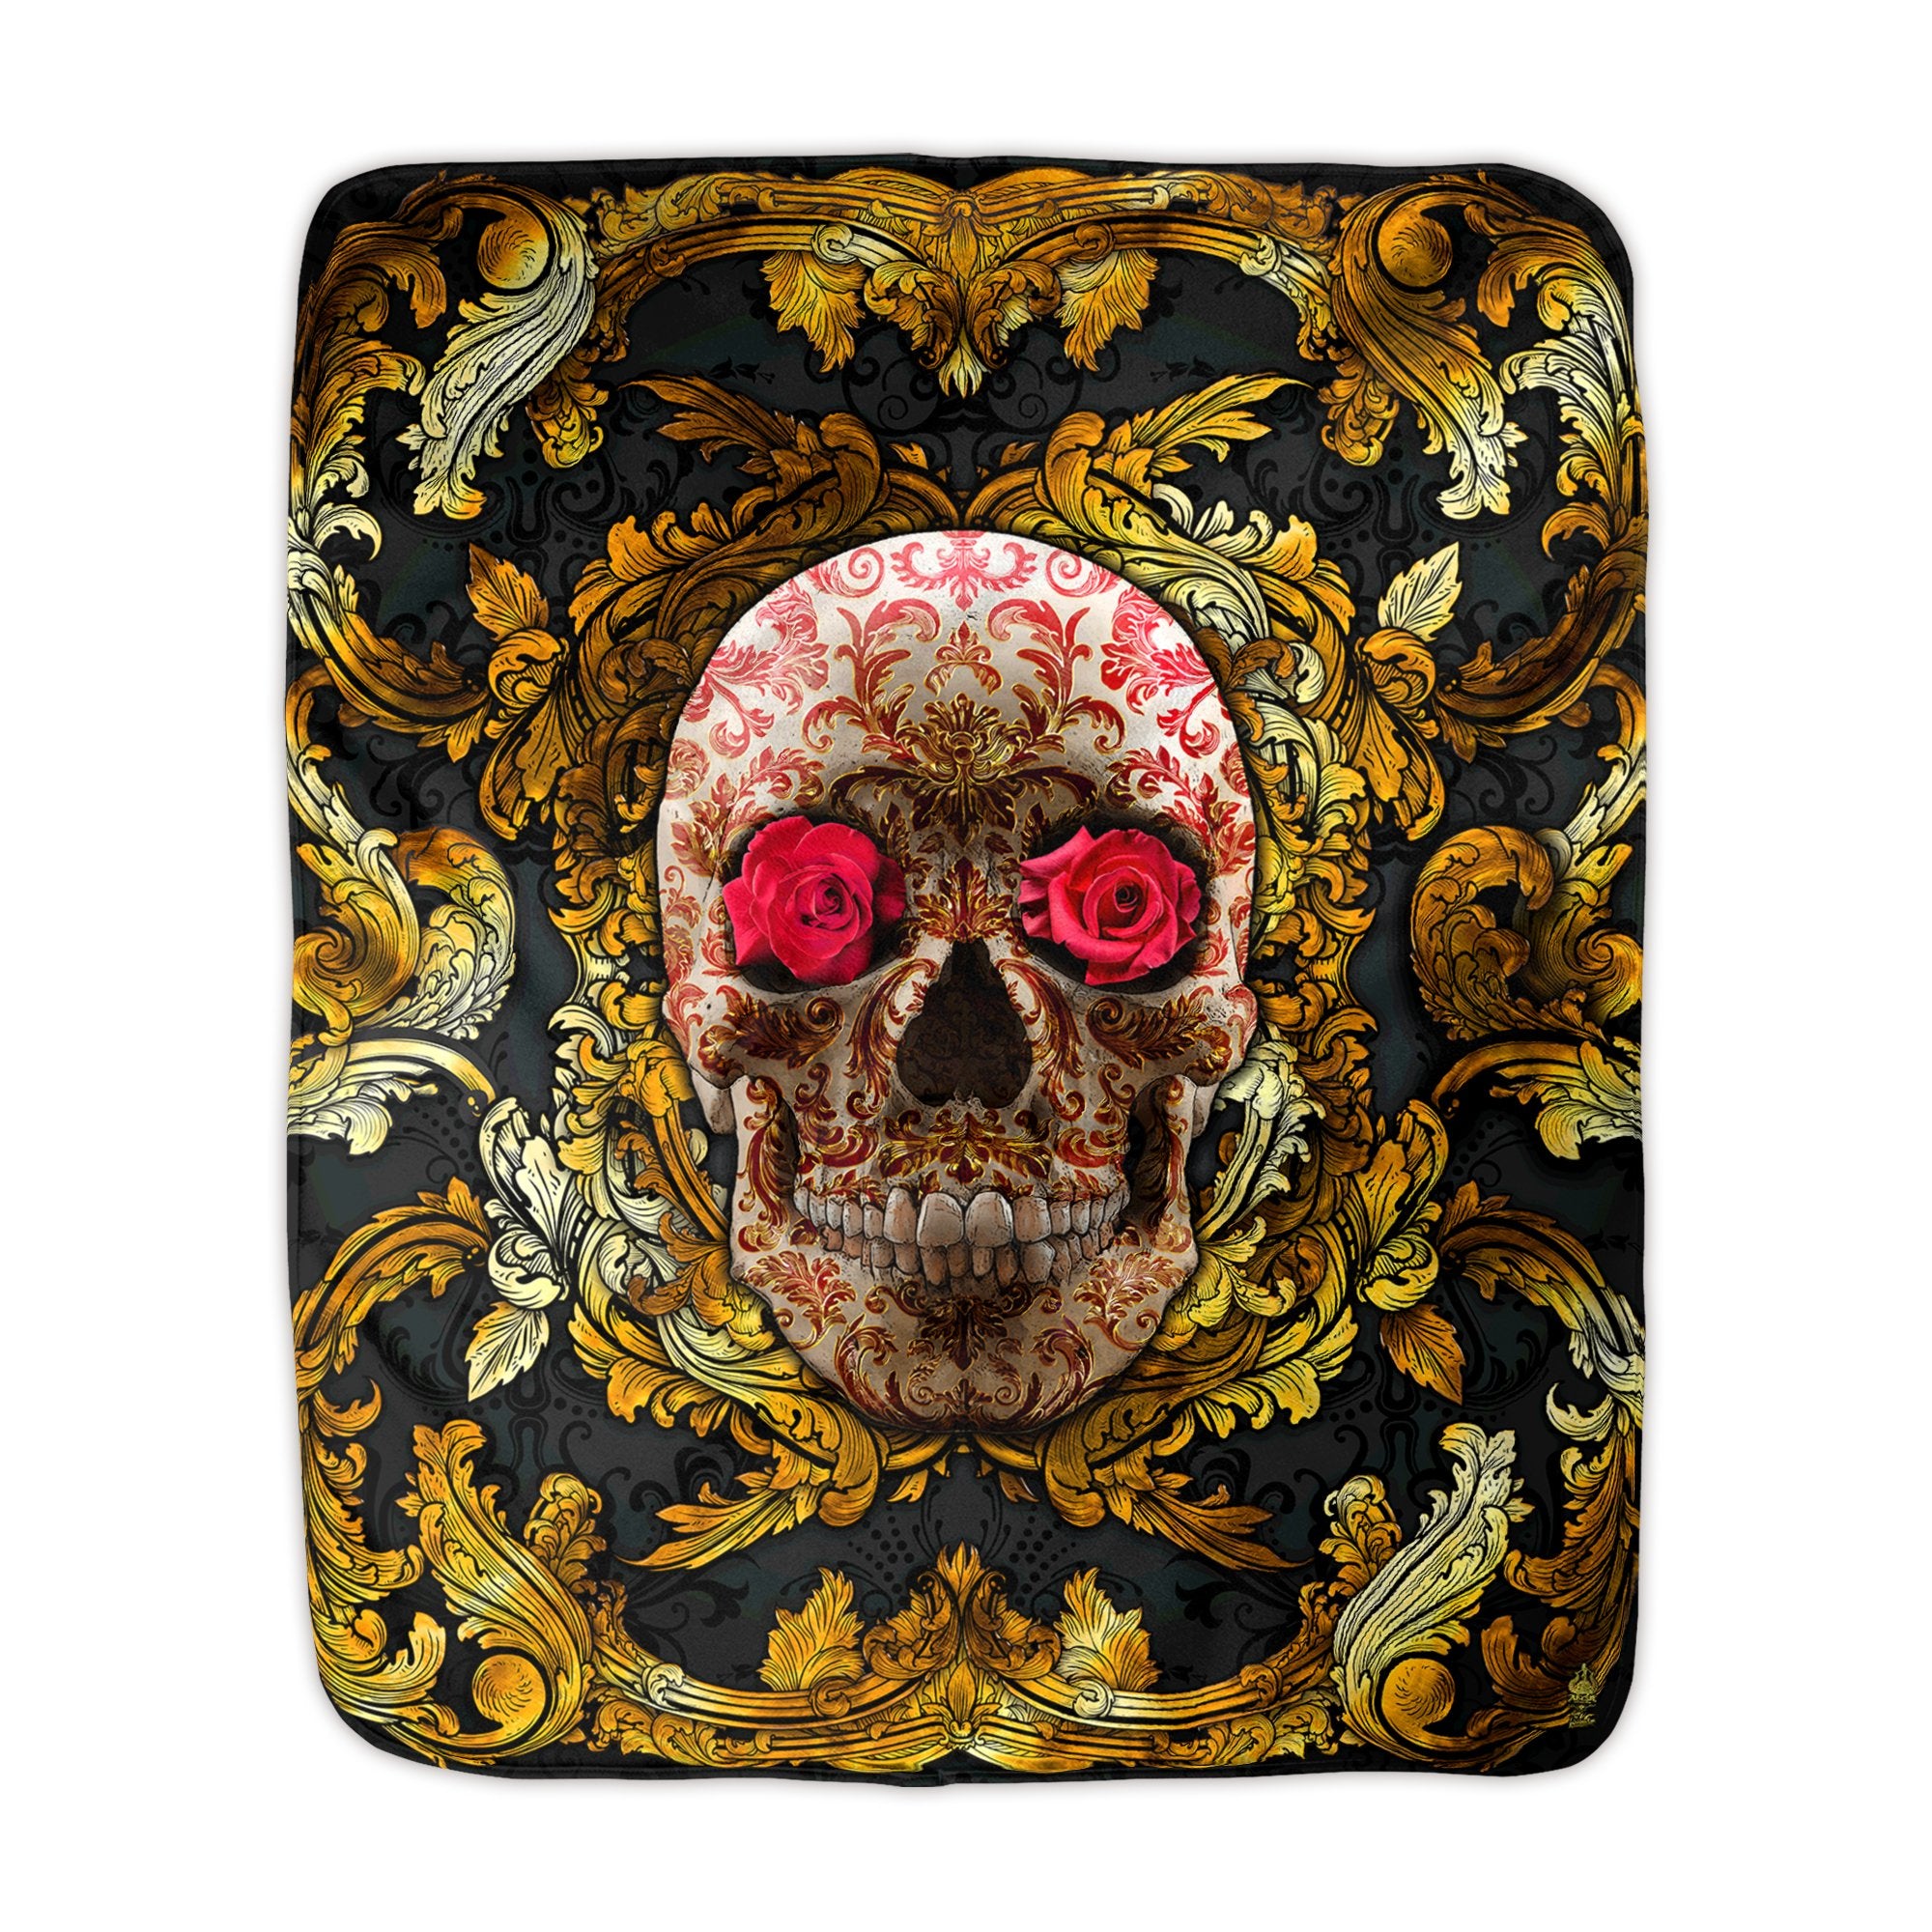 Gold Skull Sherpa Fleece Throw Blanket, Macabre Art, Baroque Decor - 2 versions - Abysm Internal